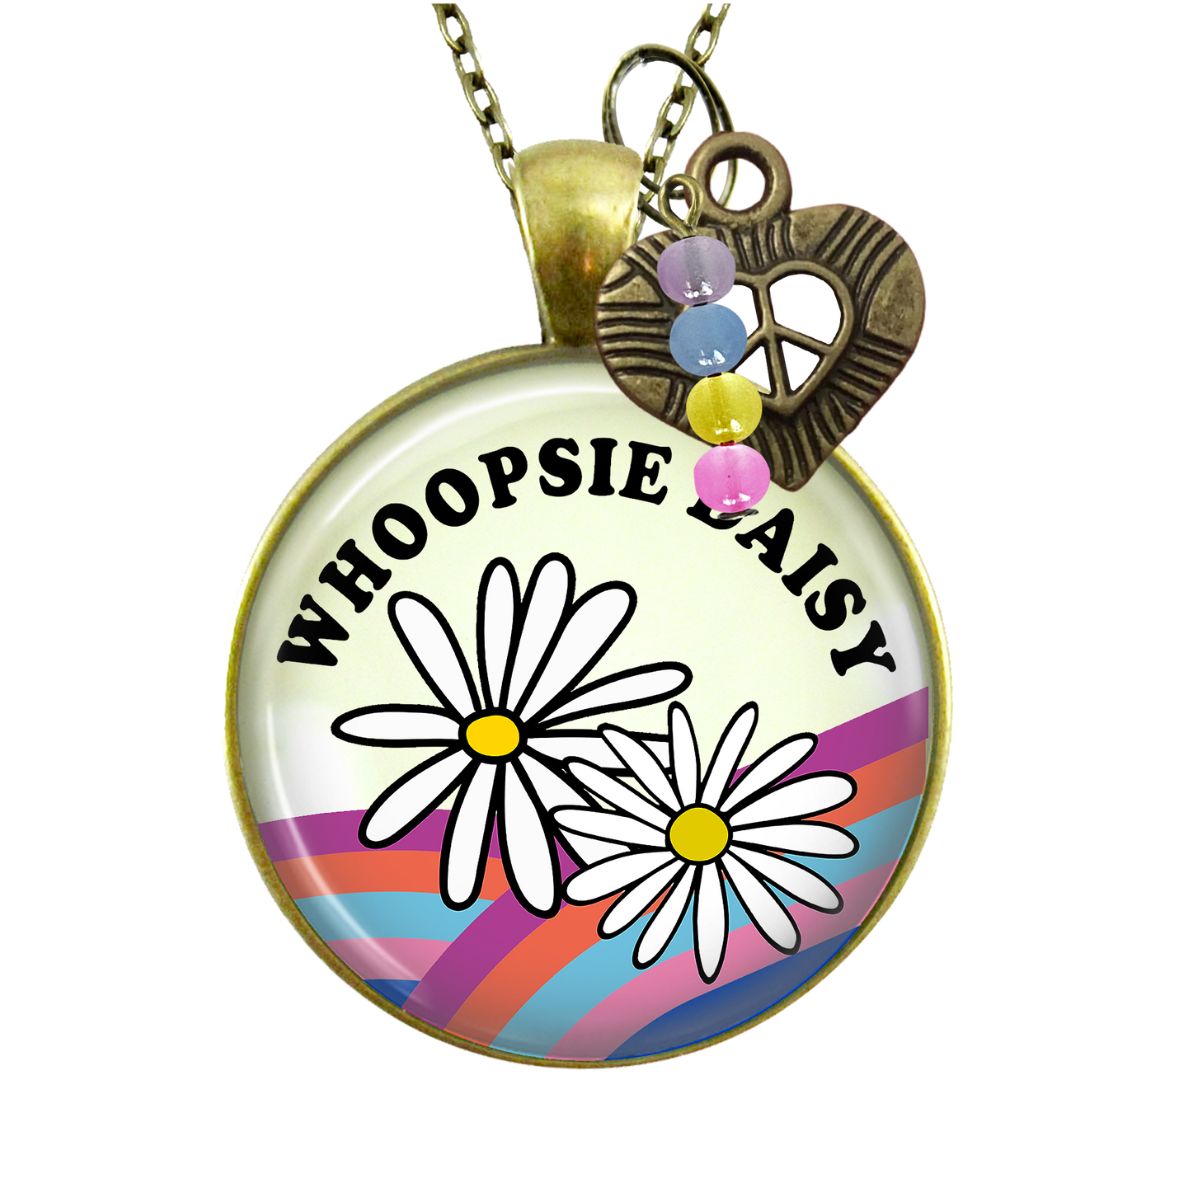 Handmade Gutsy Goodness Jewelry Whoopsie Daisy Boho Hippie Style Necklace Rainbow Pendant Jewelry Heart Peace Symbol Charm, Card